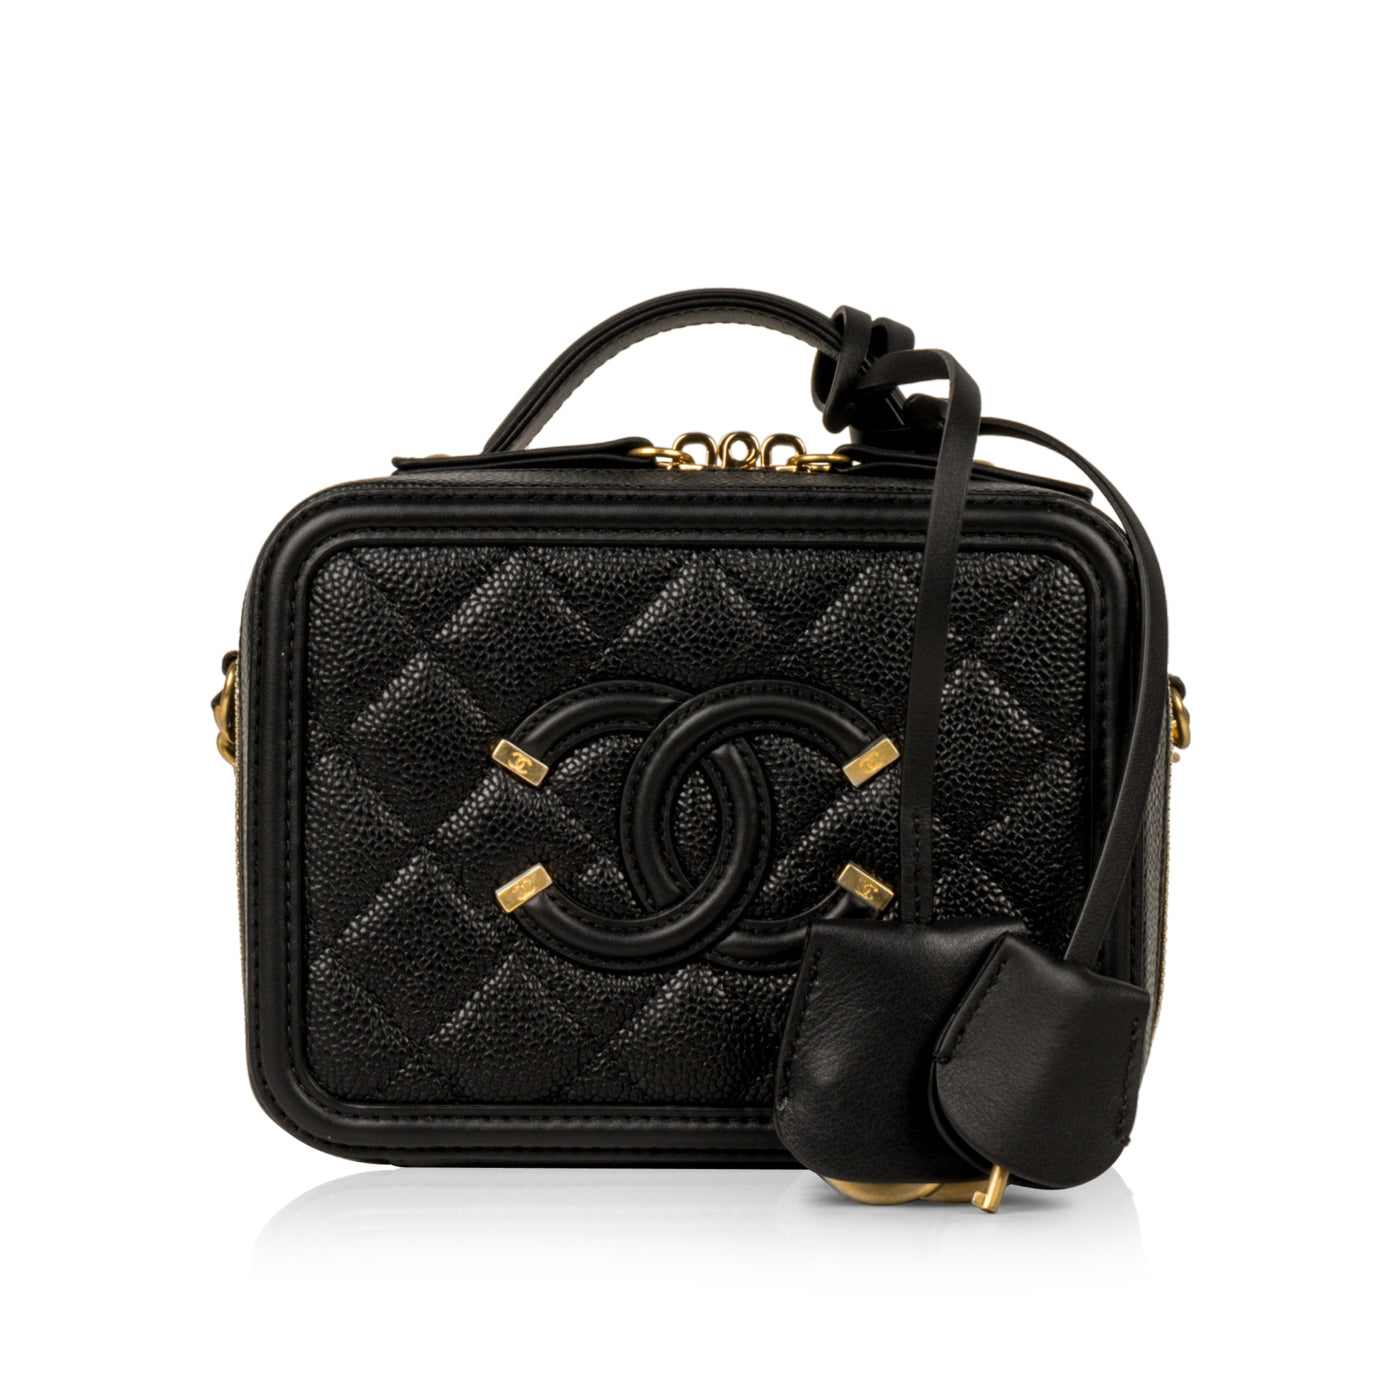 Chanel - Mini Filigree CC Vanity Case - Black Caviar - New